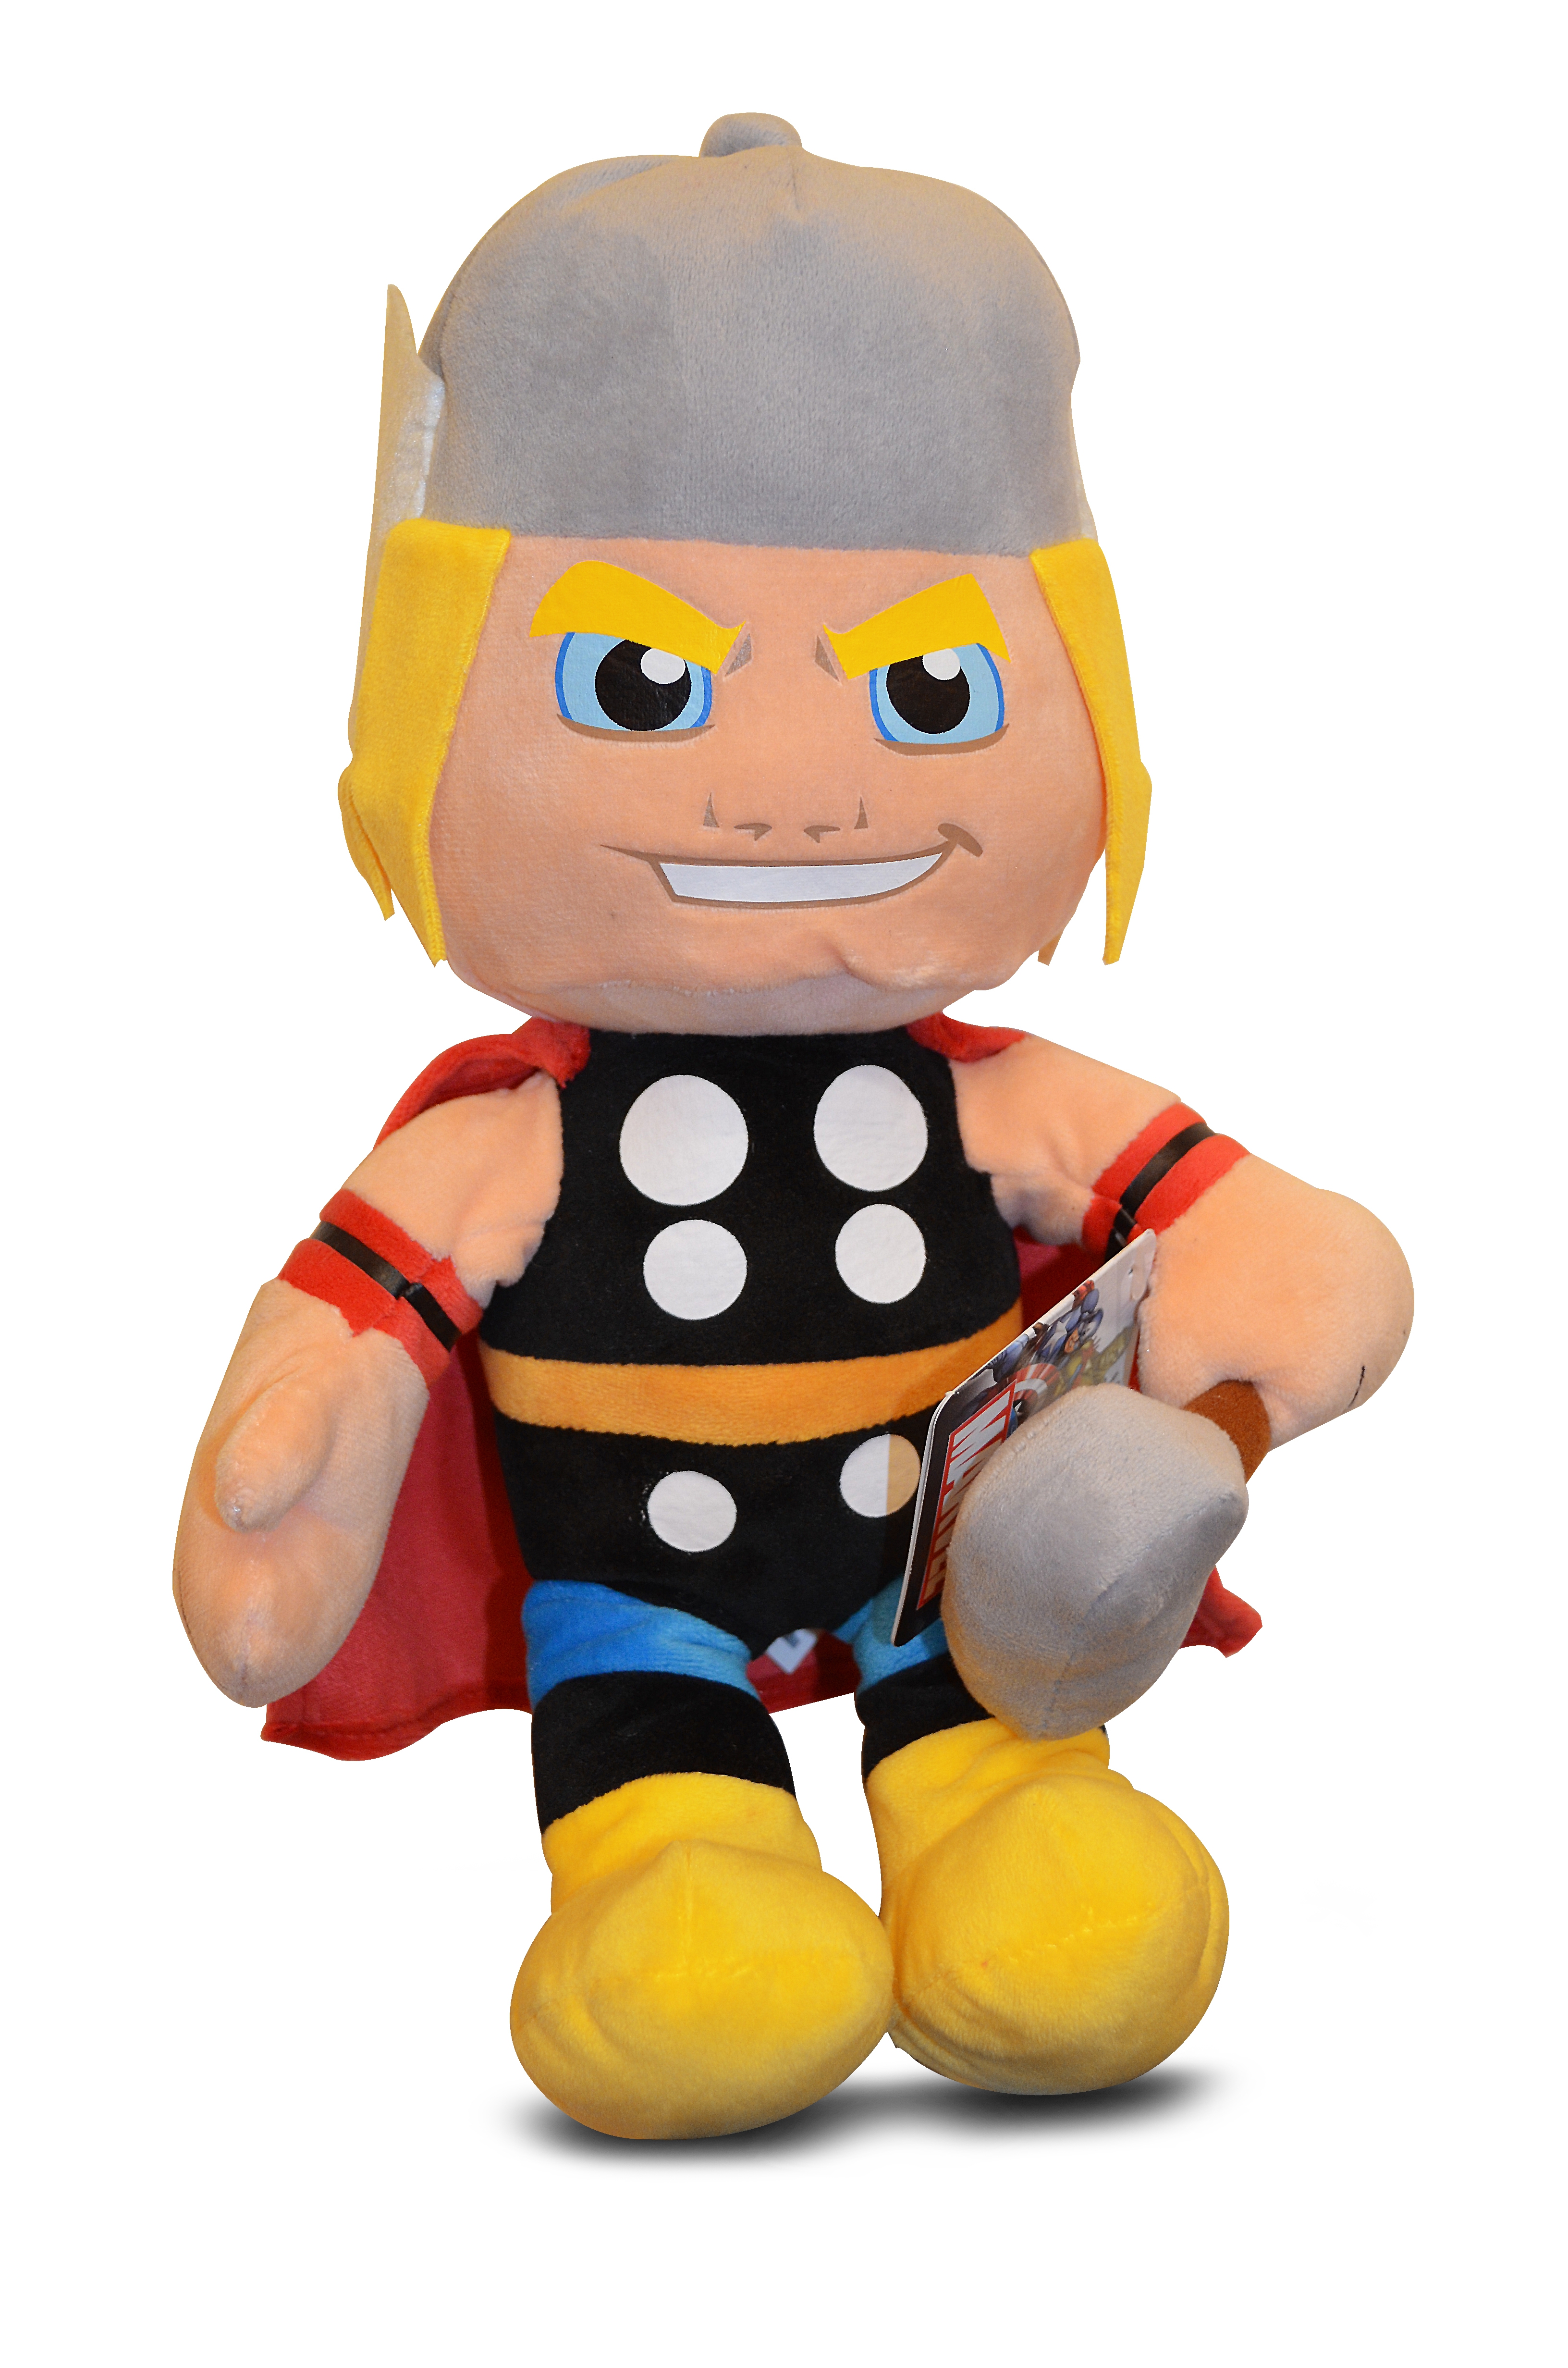 Marvel Superheroes 'Thor' 12 inch Plush Soft Toy